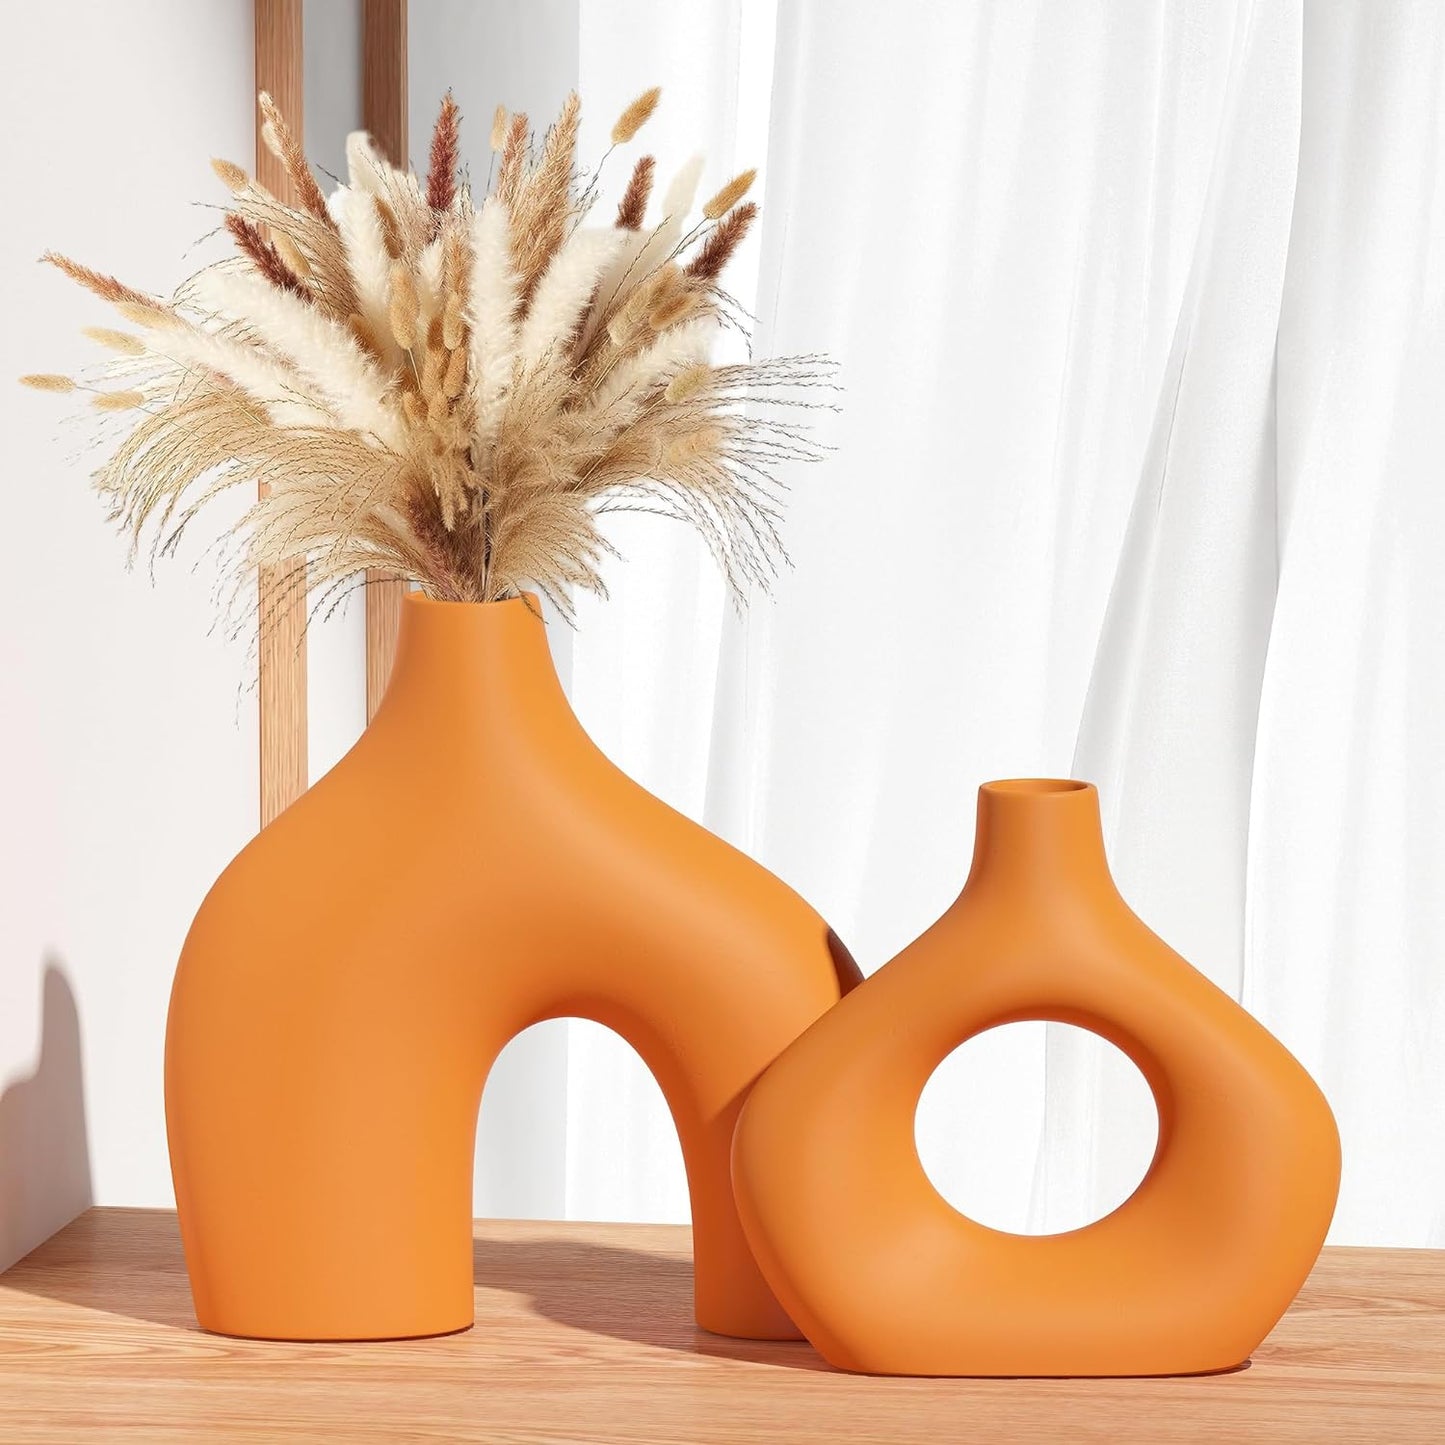 Inovative Ceramic Vase Set